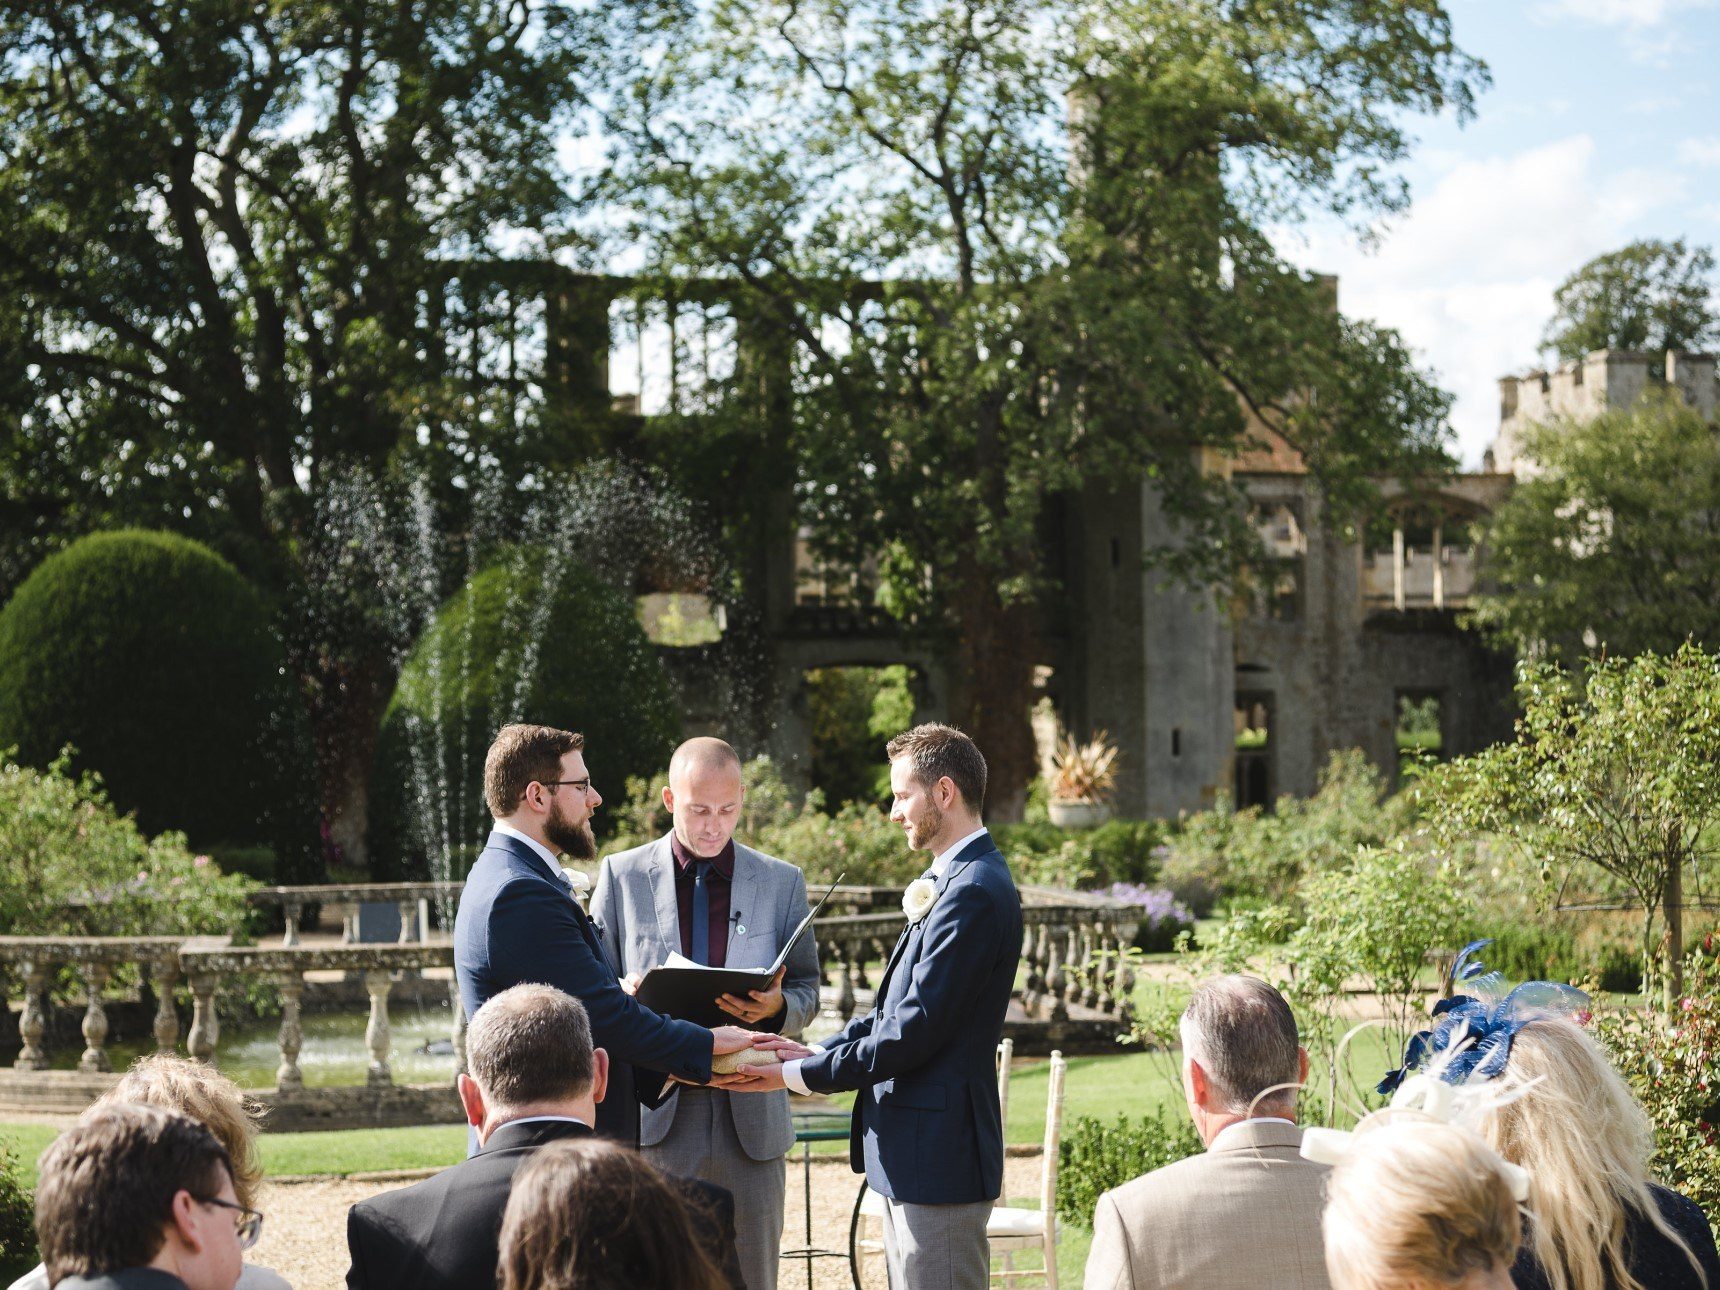 Groomsmen holding hands through wedding vows in the Queen's Garden, with views of castle ruins